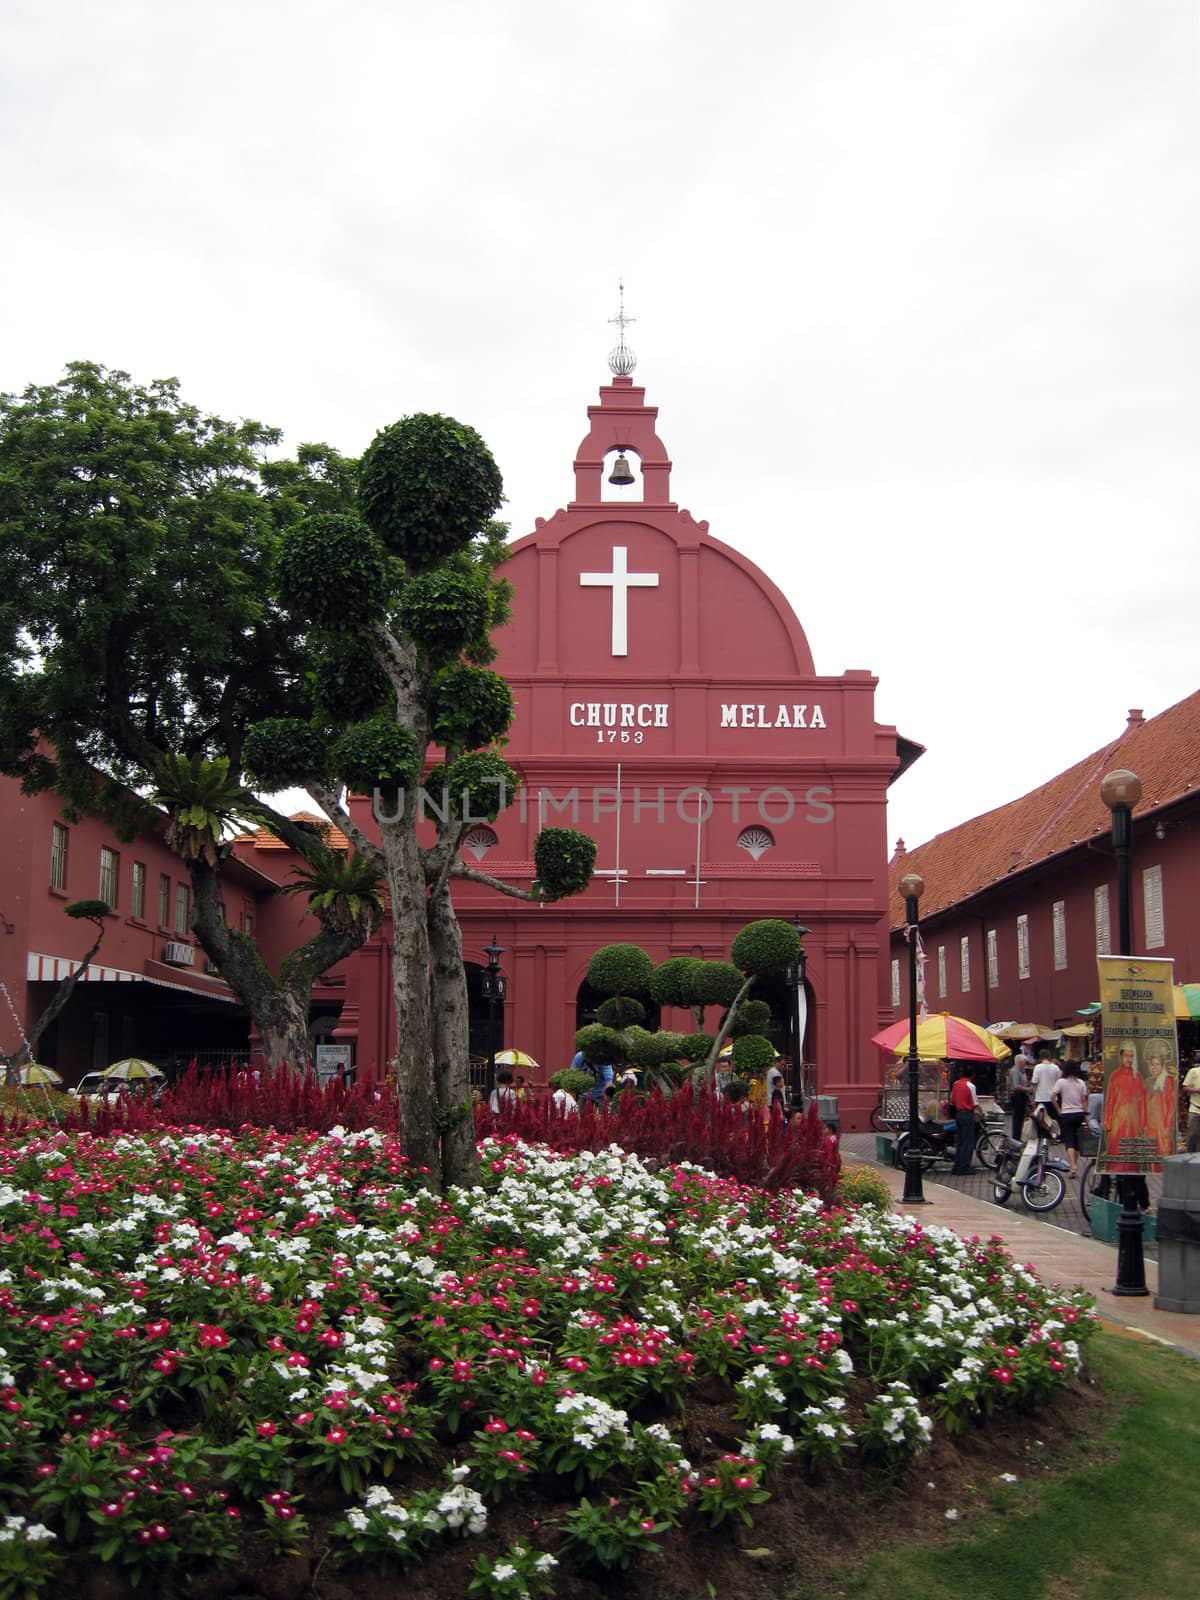 Church of Melaka by annielim